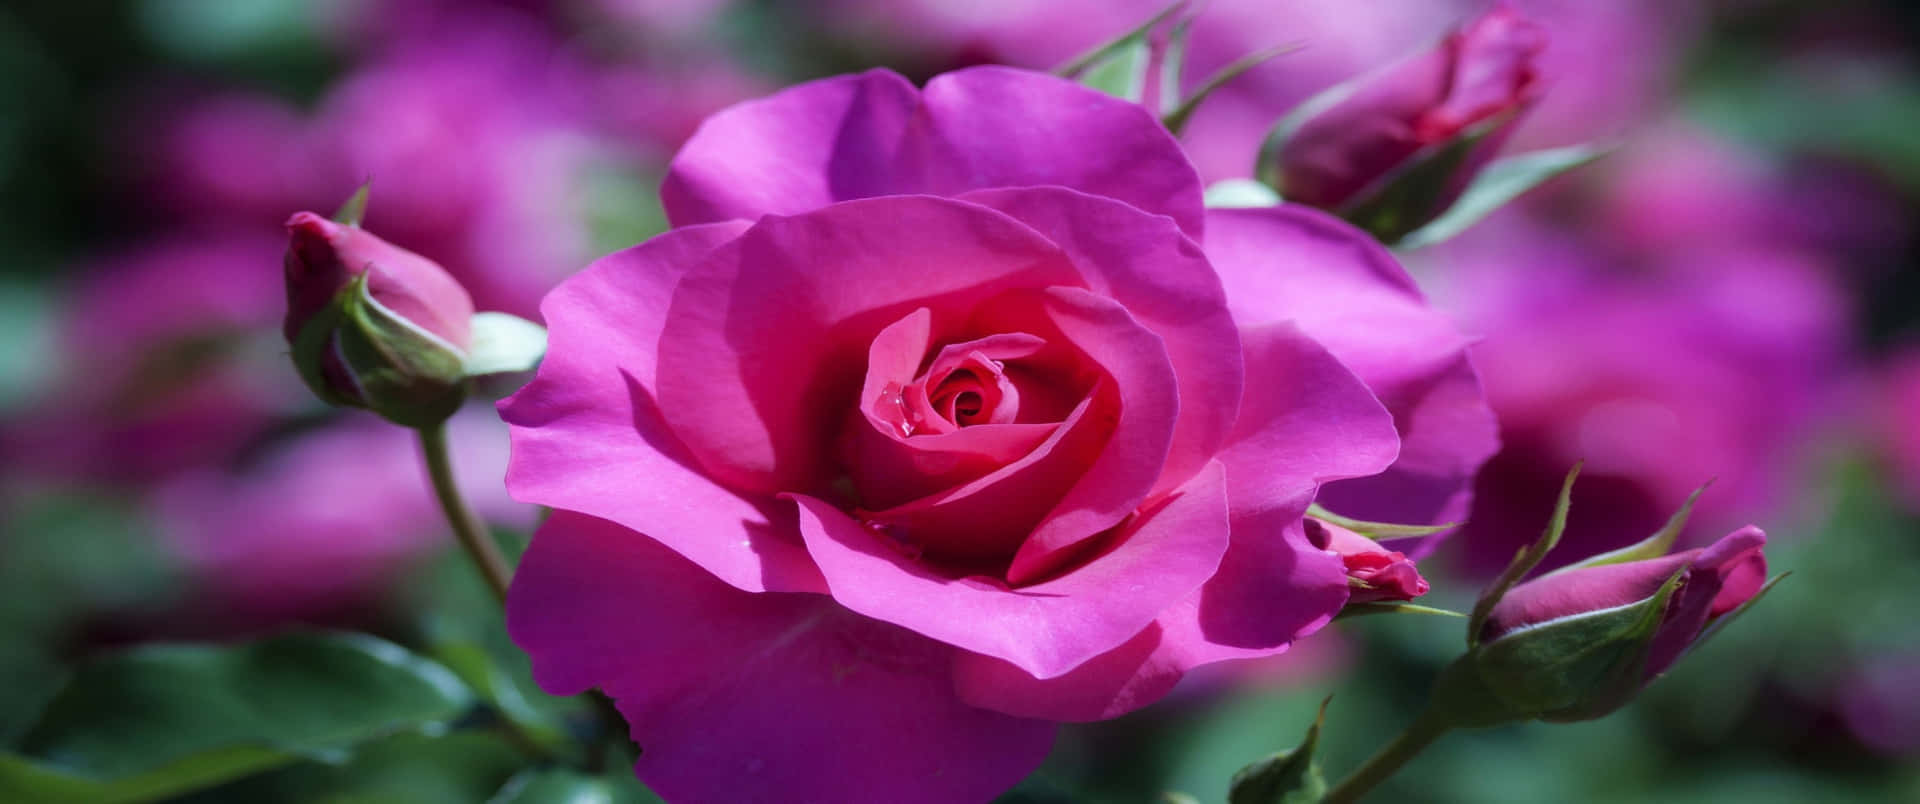 Unincantevole Bouquet Di Rose